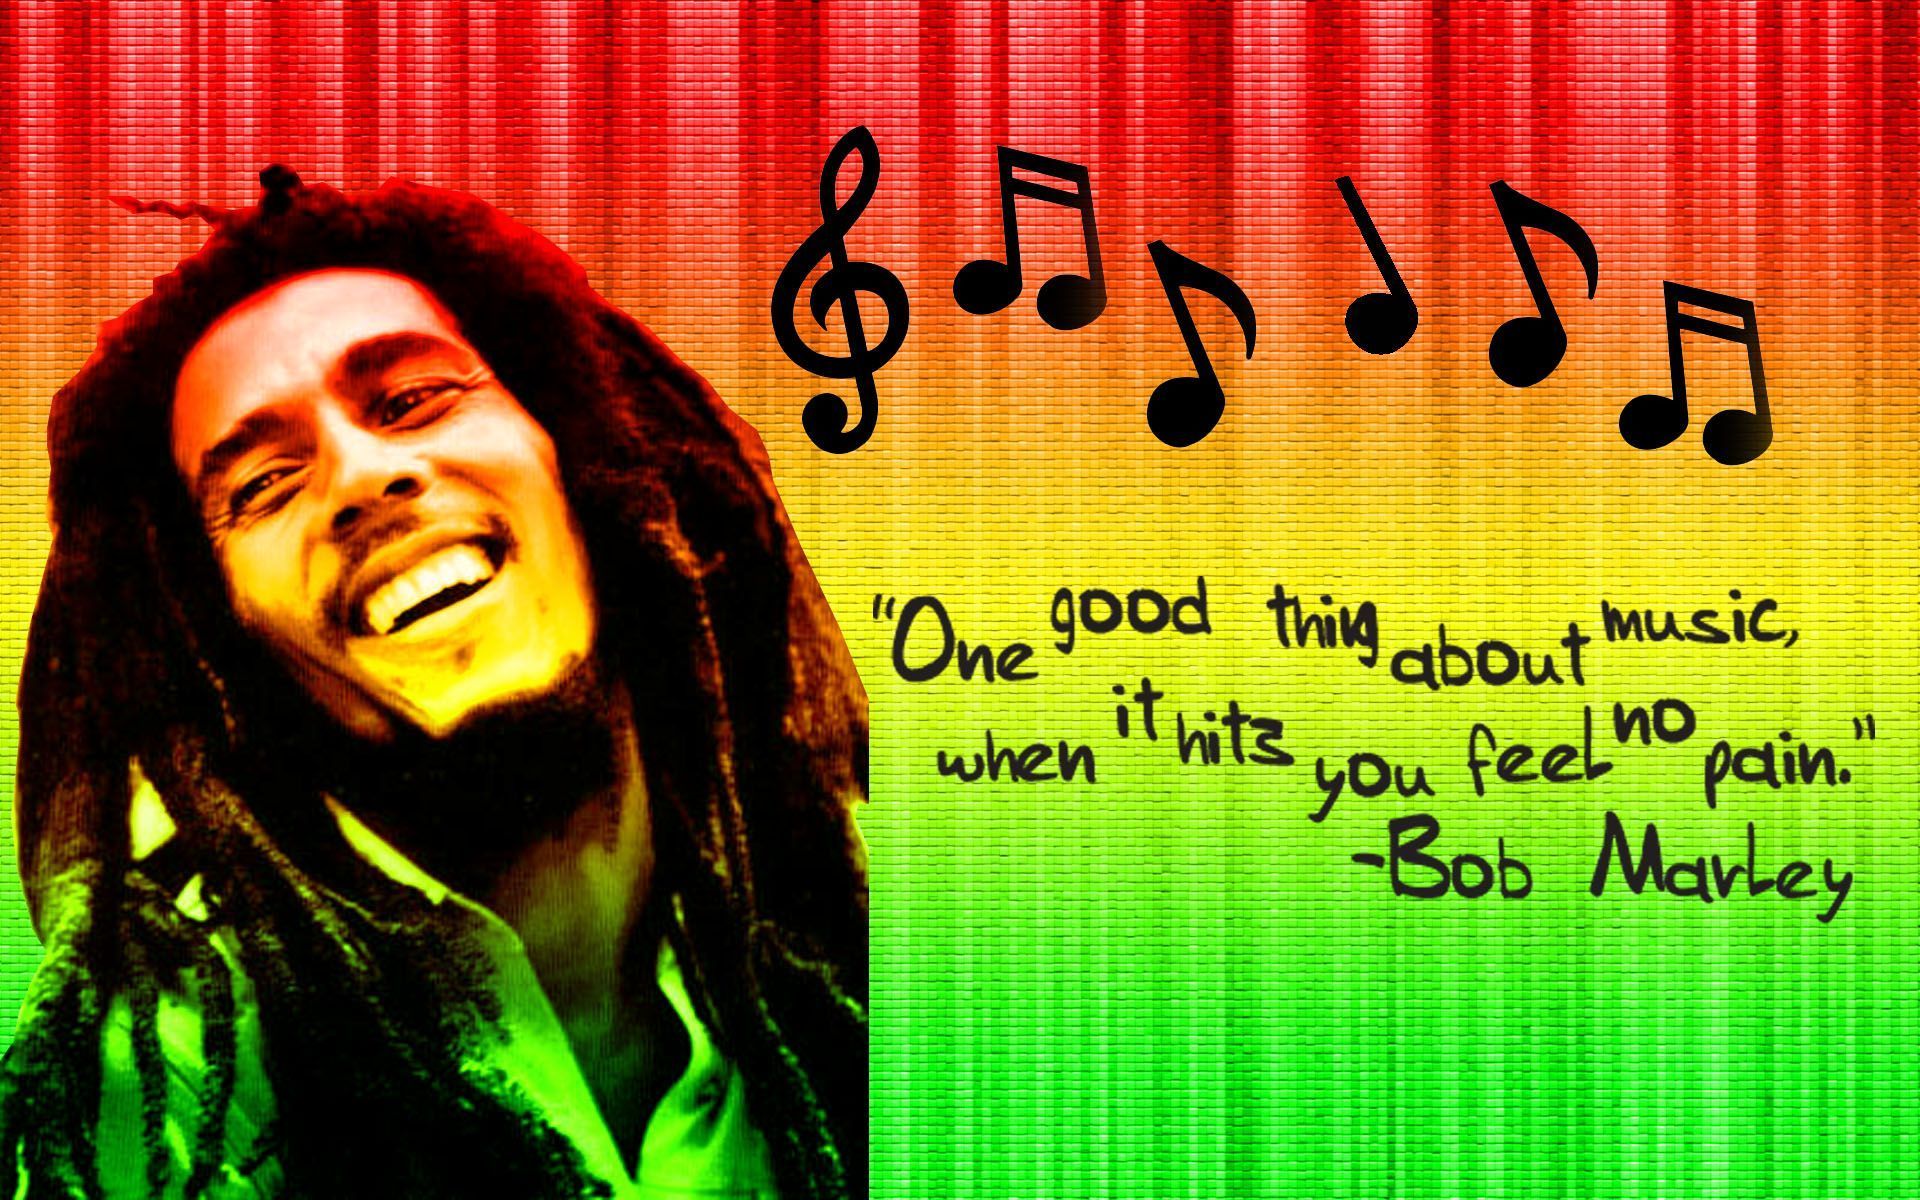 Bob Marley Desktop Wallpaper, Bob Marley Backgrouns, New Backgrounds